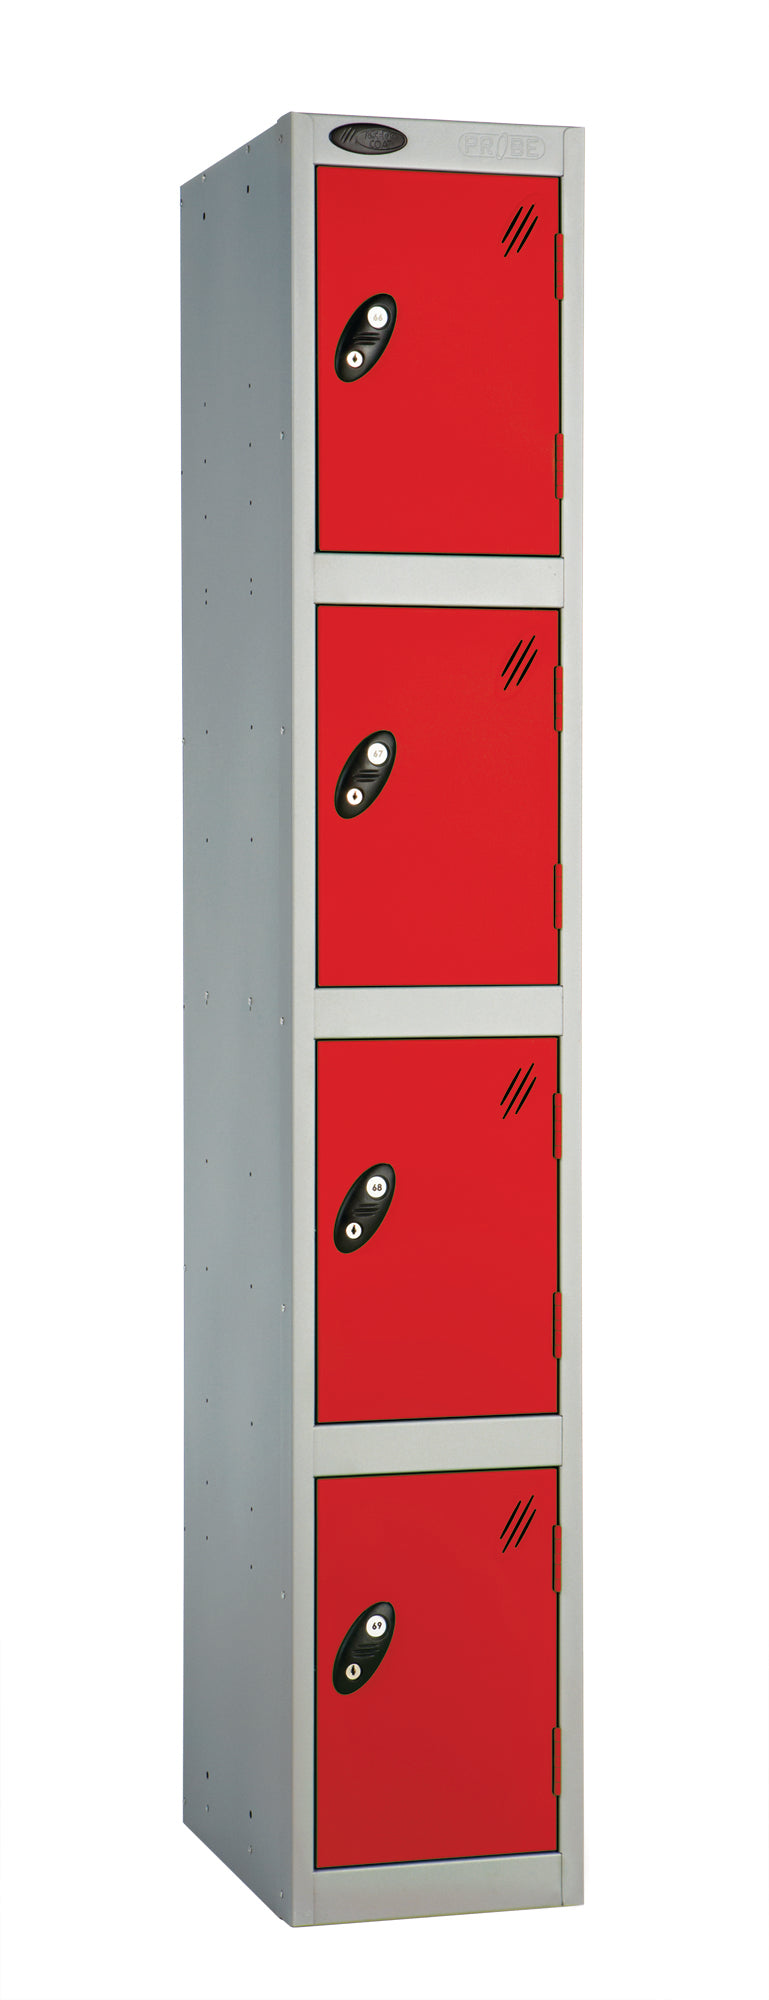 PROBEBOX STANDARD 1 NEST STEEL LOCKERS - FLAME RED 4 DOOR Storage Lockers > Lockers > Cabinets > Storage > Probe > One Stop For Safety   